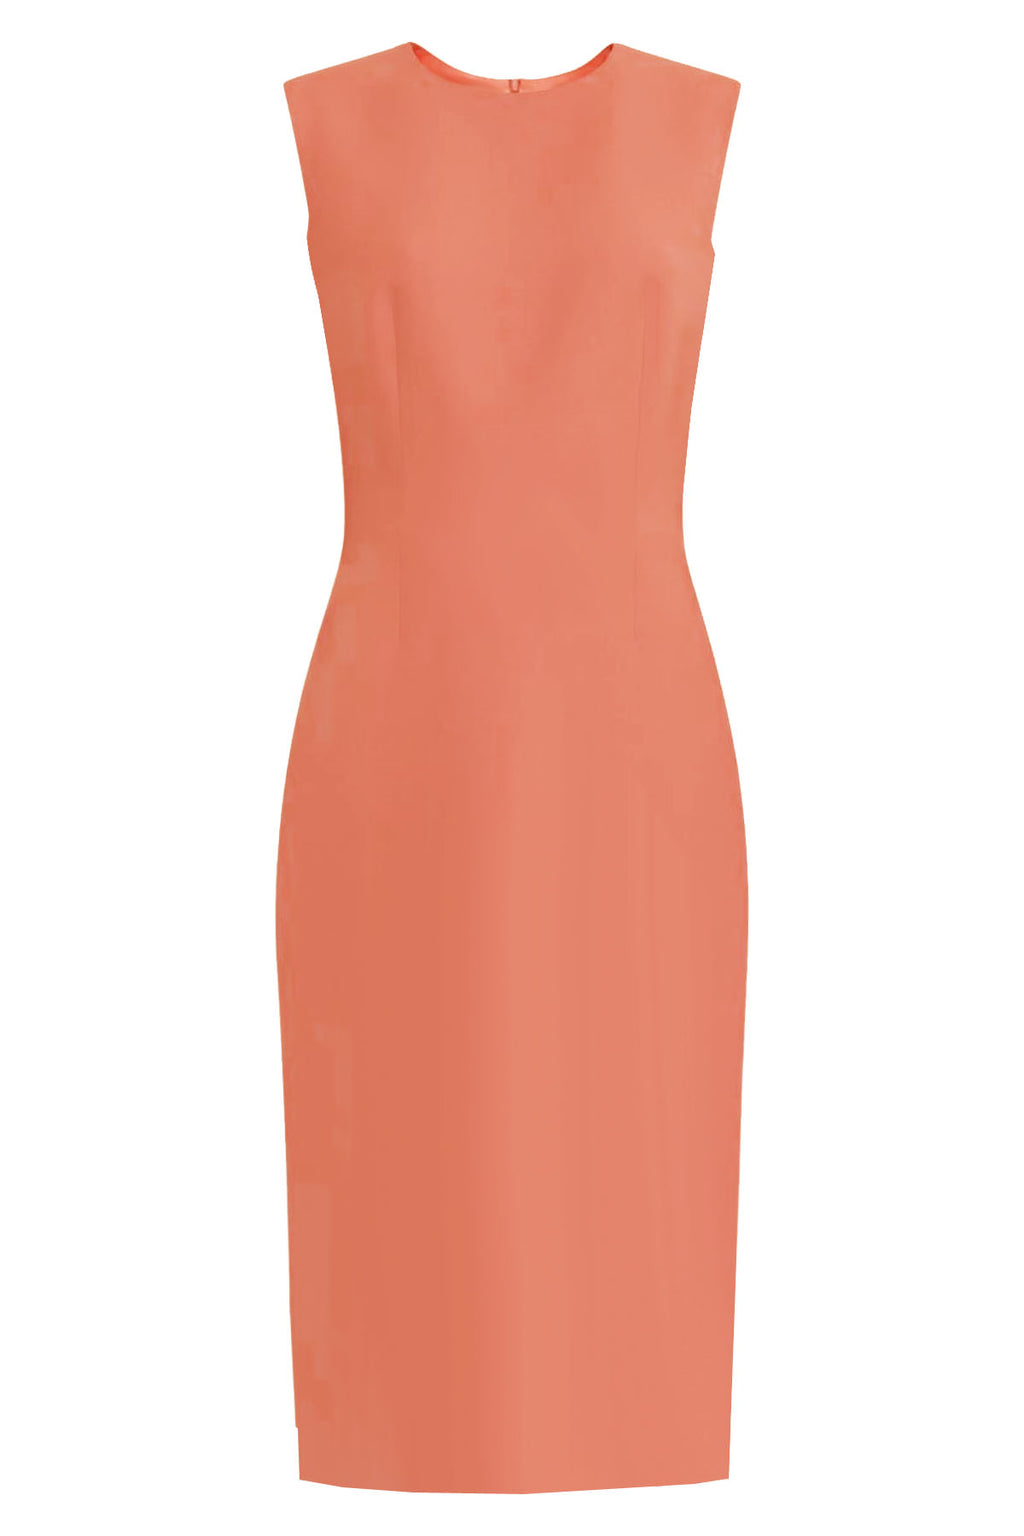 Krew Sheath Dress -New Colors